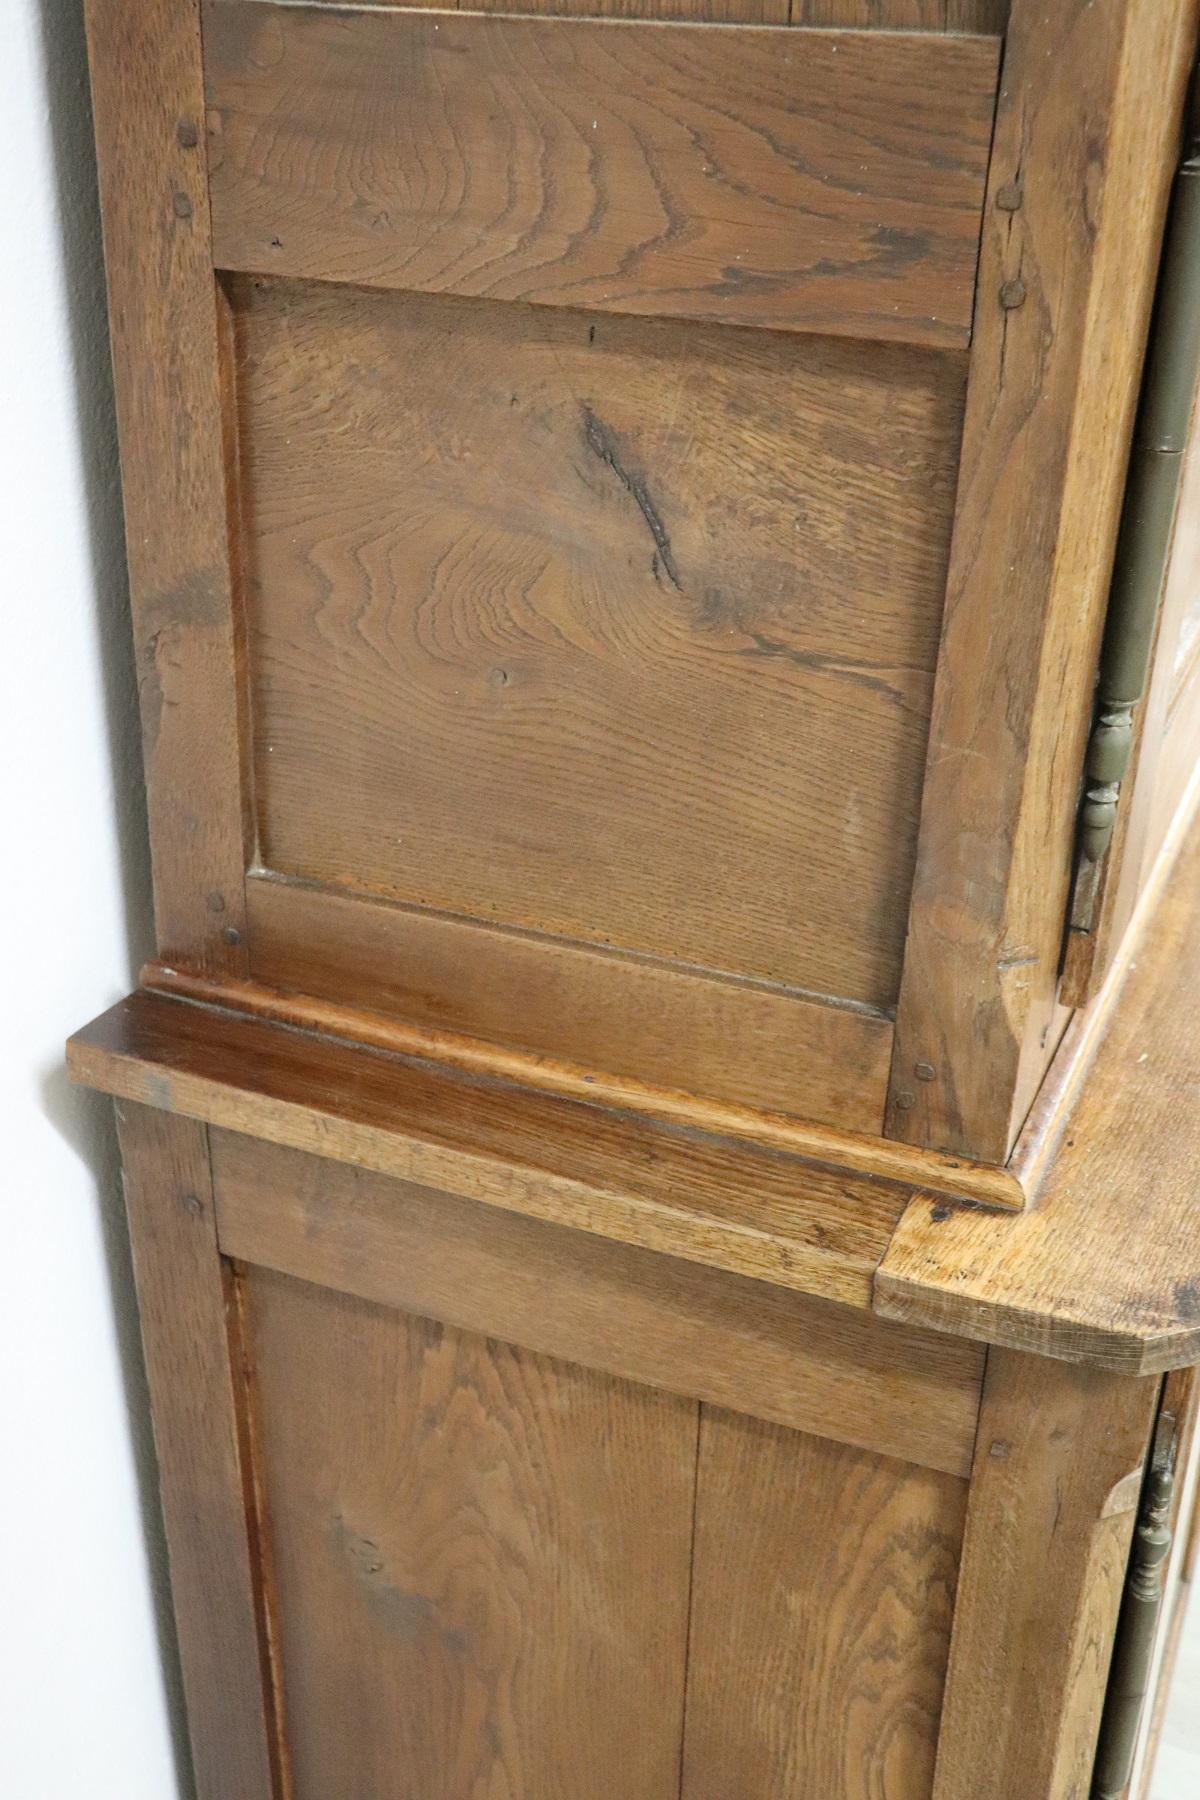 19th Century French Oak Wood Sideboard or Buffet, 1850s (Eichenholz)